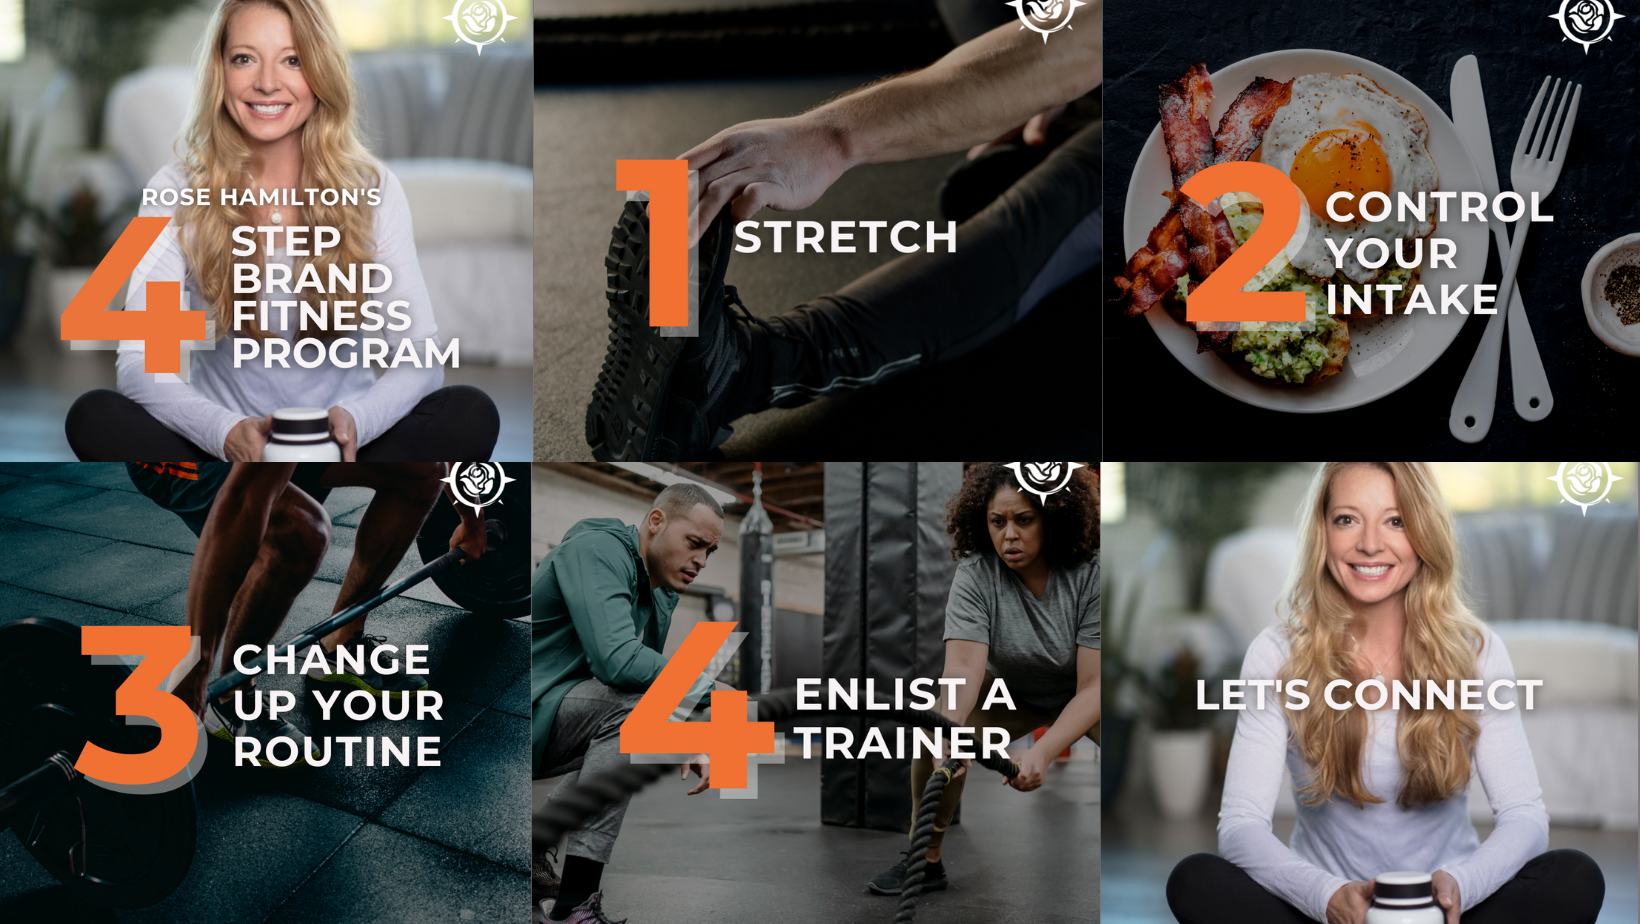 4-Step Brand Fitness Program